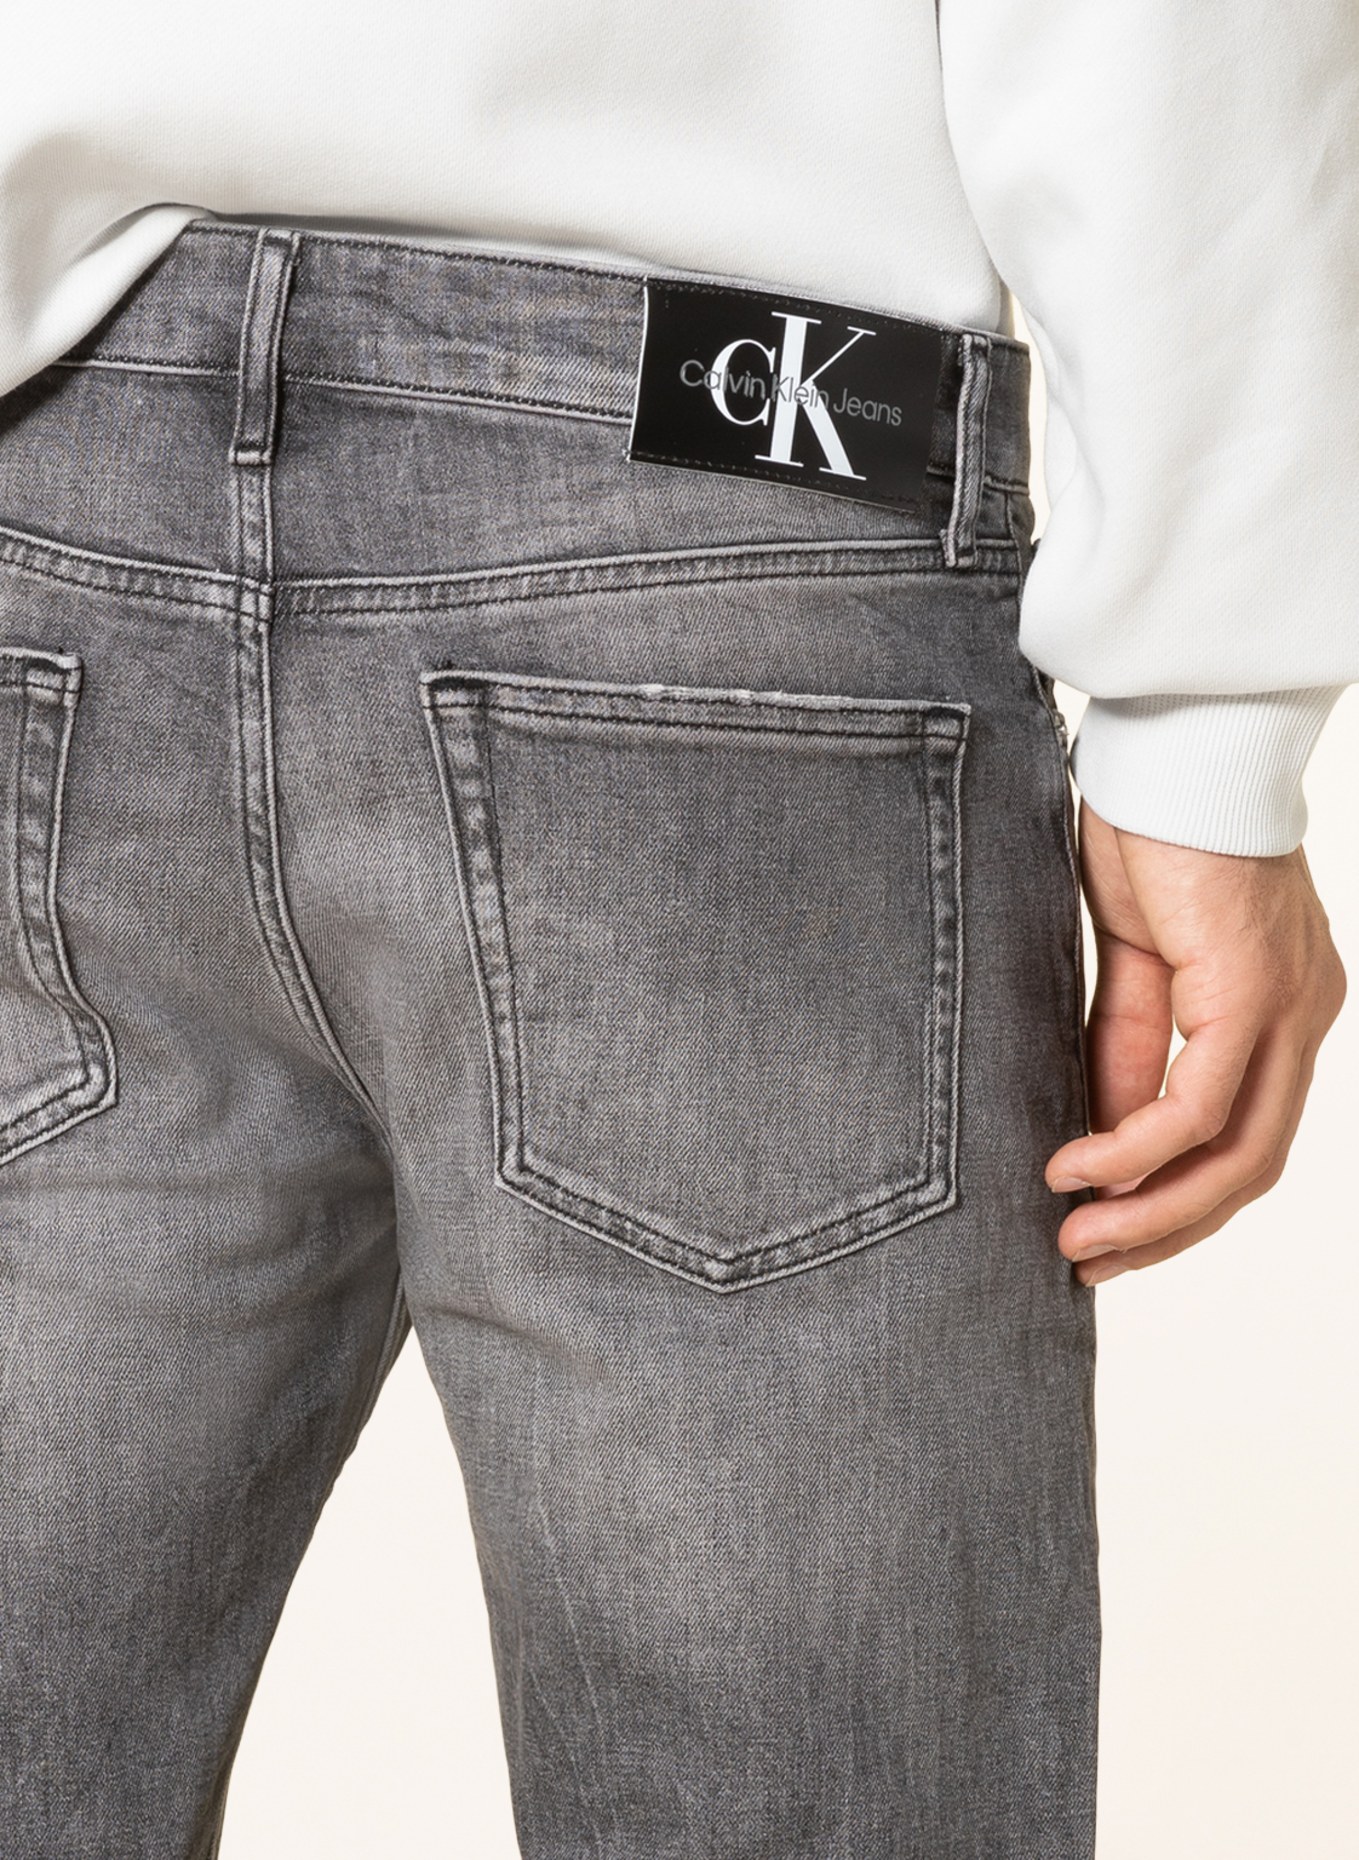 Calvin Klein Jeans Jeans Slim Tapered Fit in 1bz denim grey | Tapered Jeans